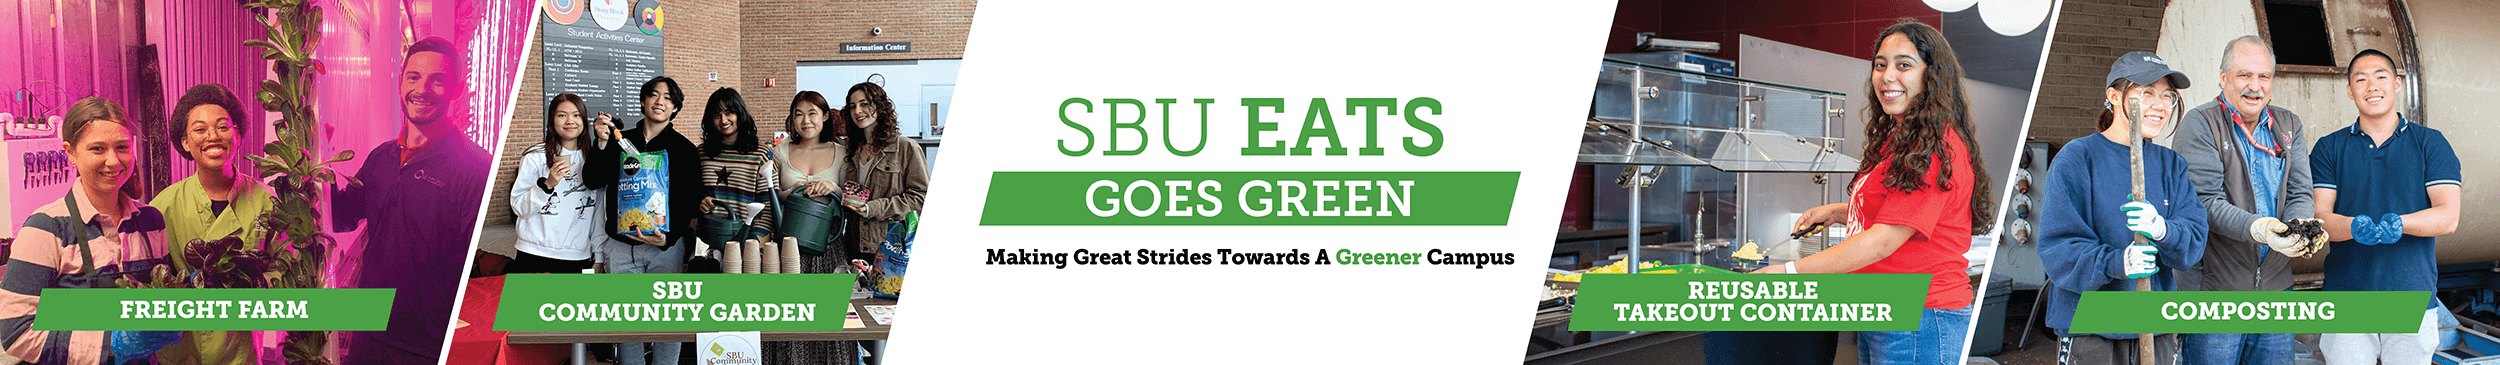 SBU Eats Goes Green